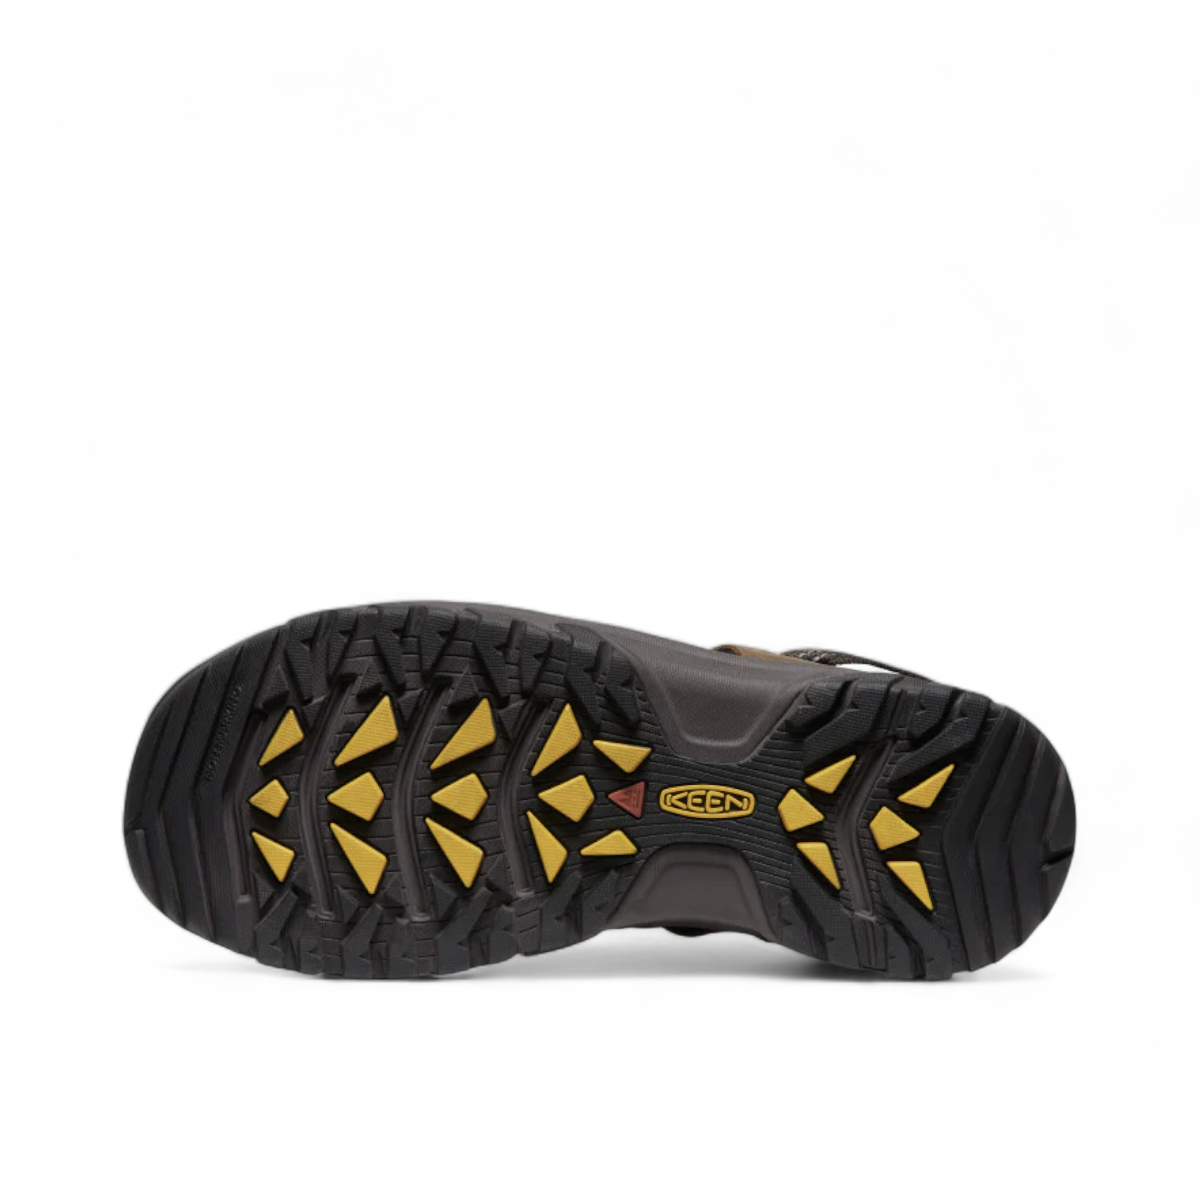 Targhee III Sandal Bison/Mulch